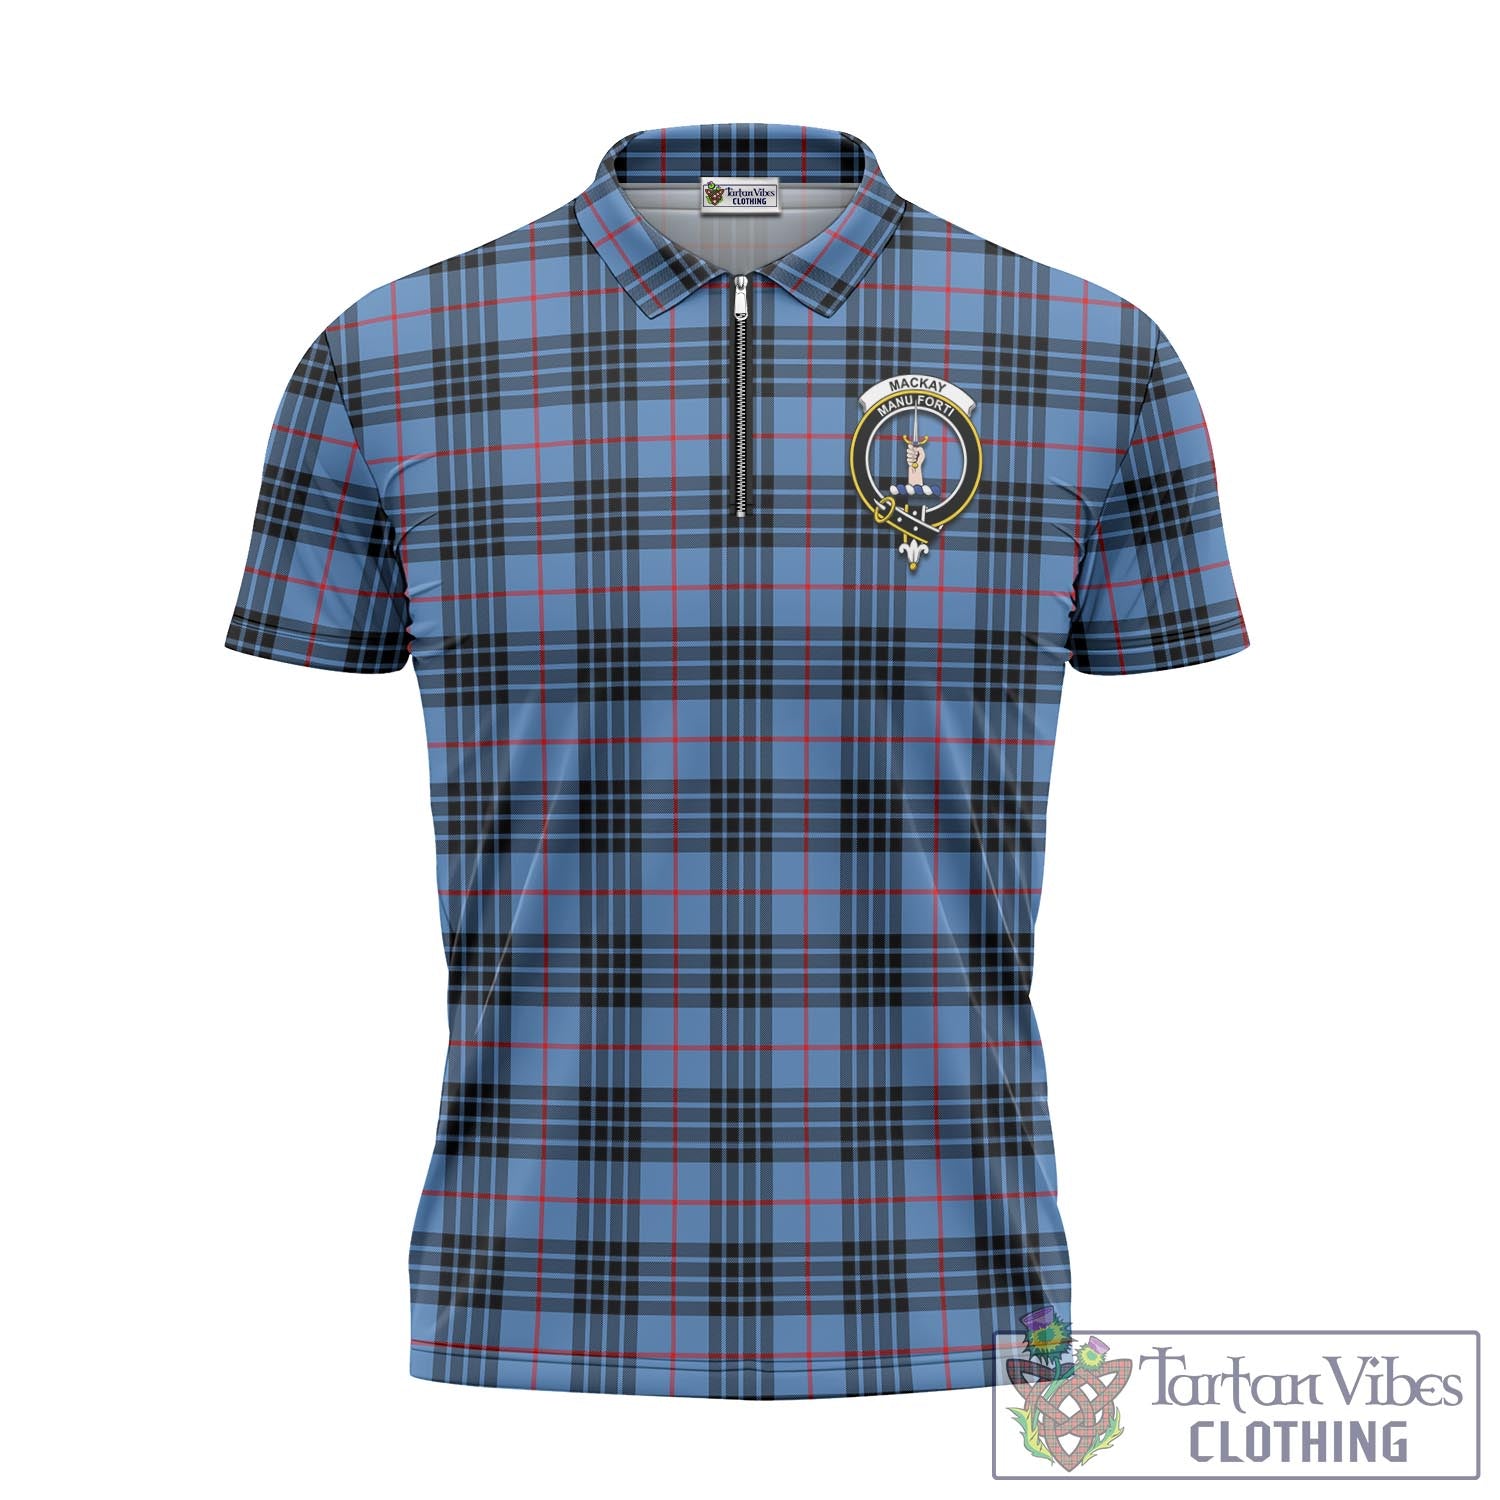 Tartan Vibes Clothing MacKay Blue Tartan Zipper Polo Shirt with Family Crest